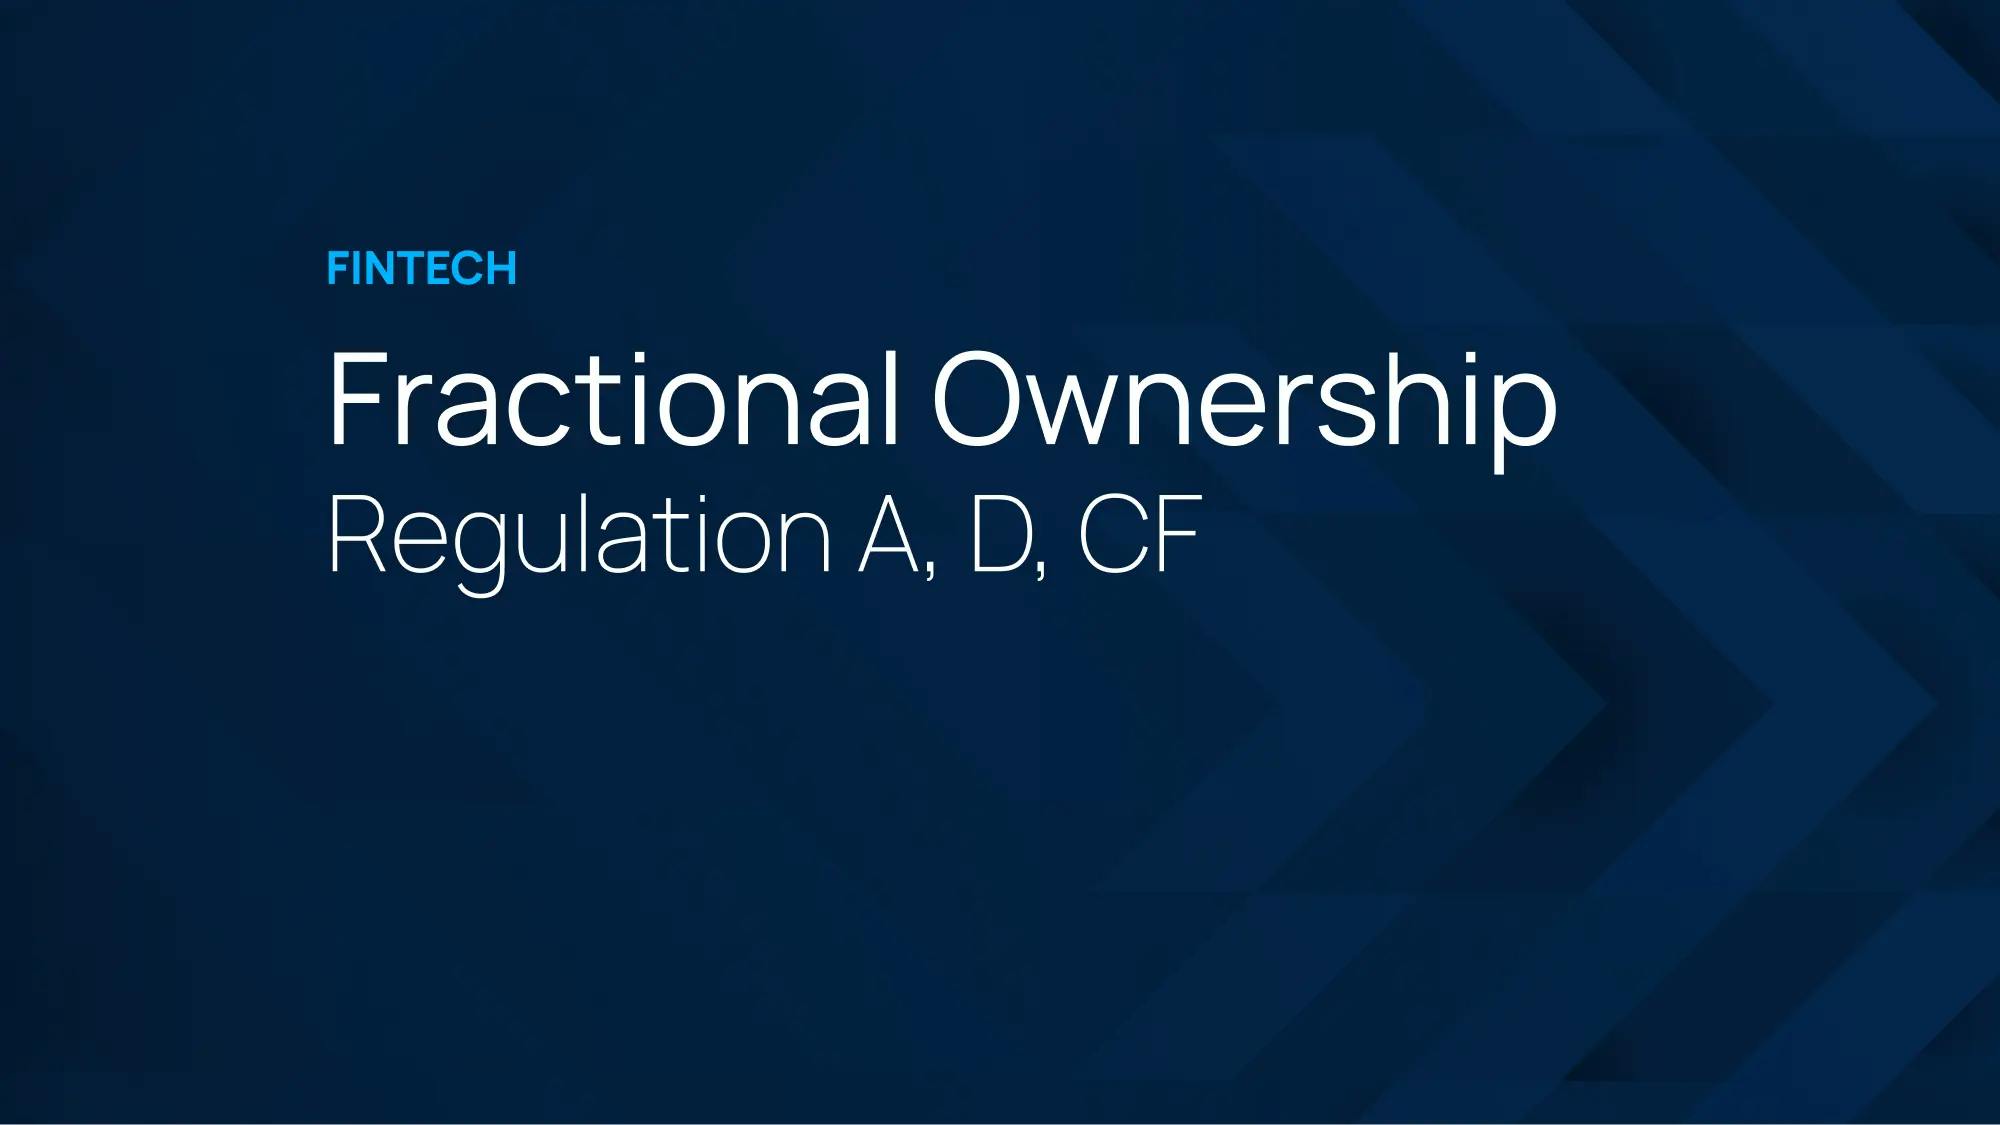 Fractional Ownership: Regulation A, D, CF